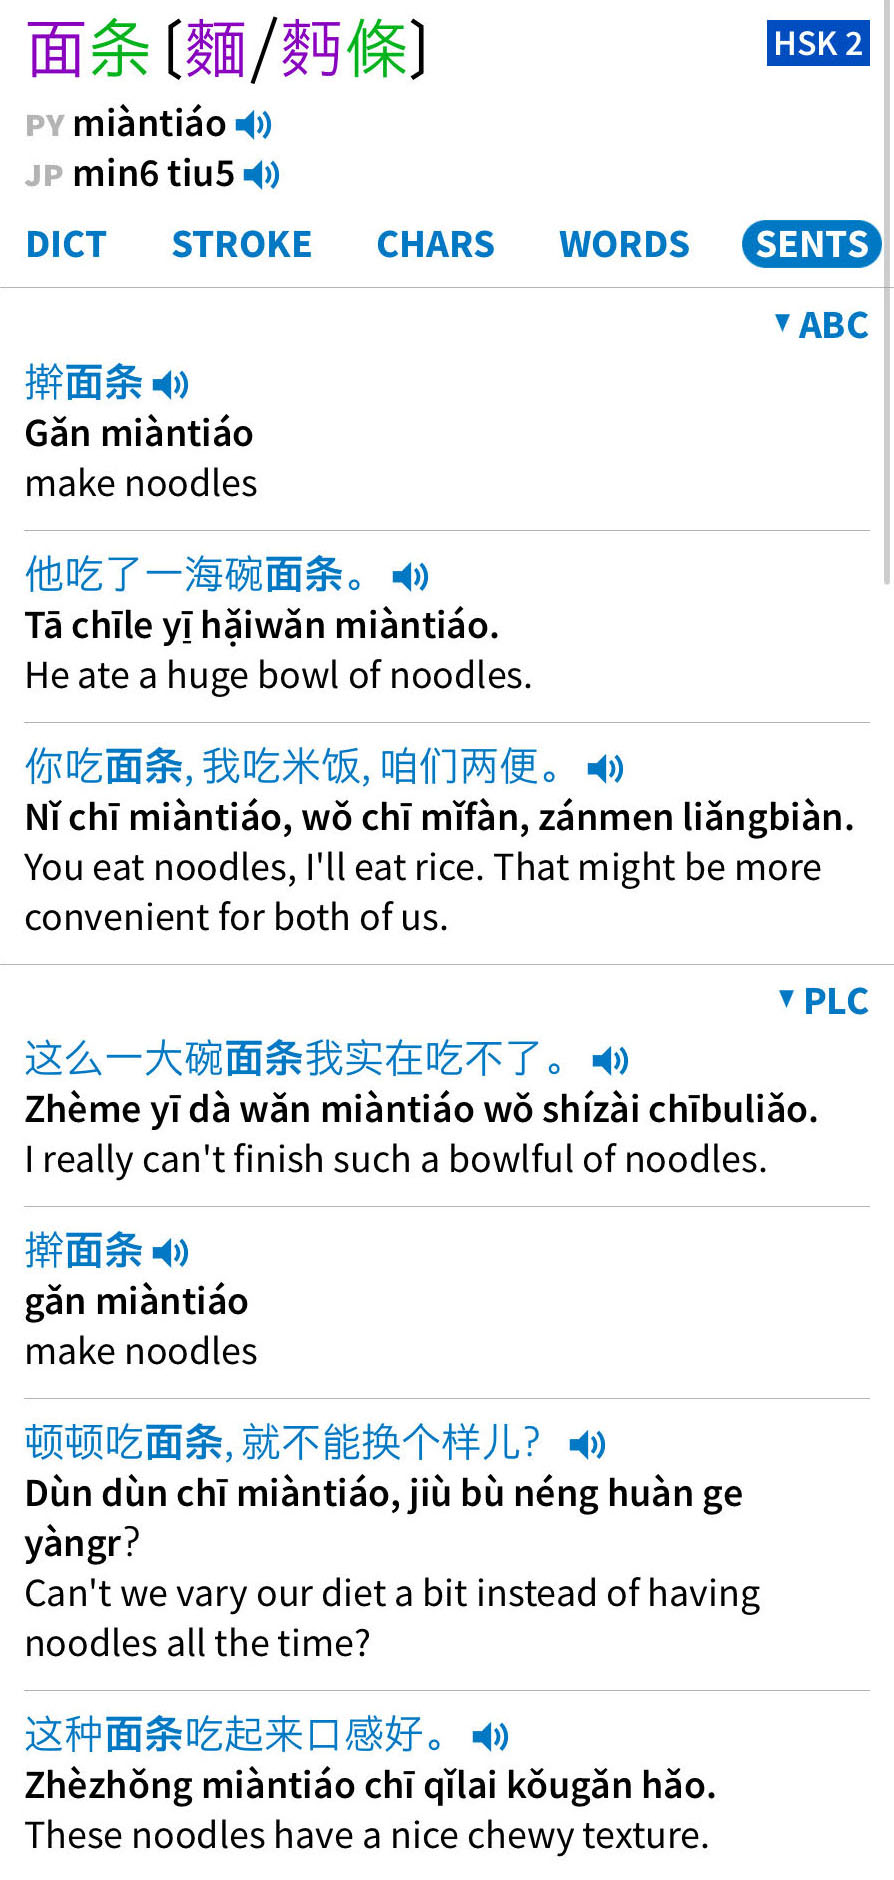 mandarin language translation